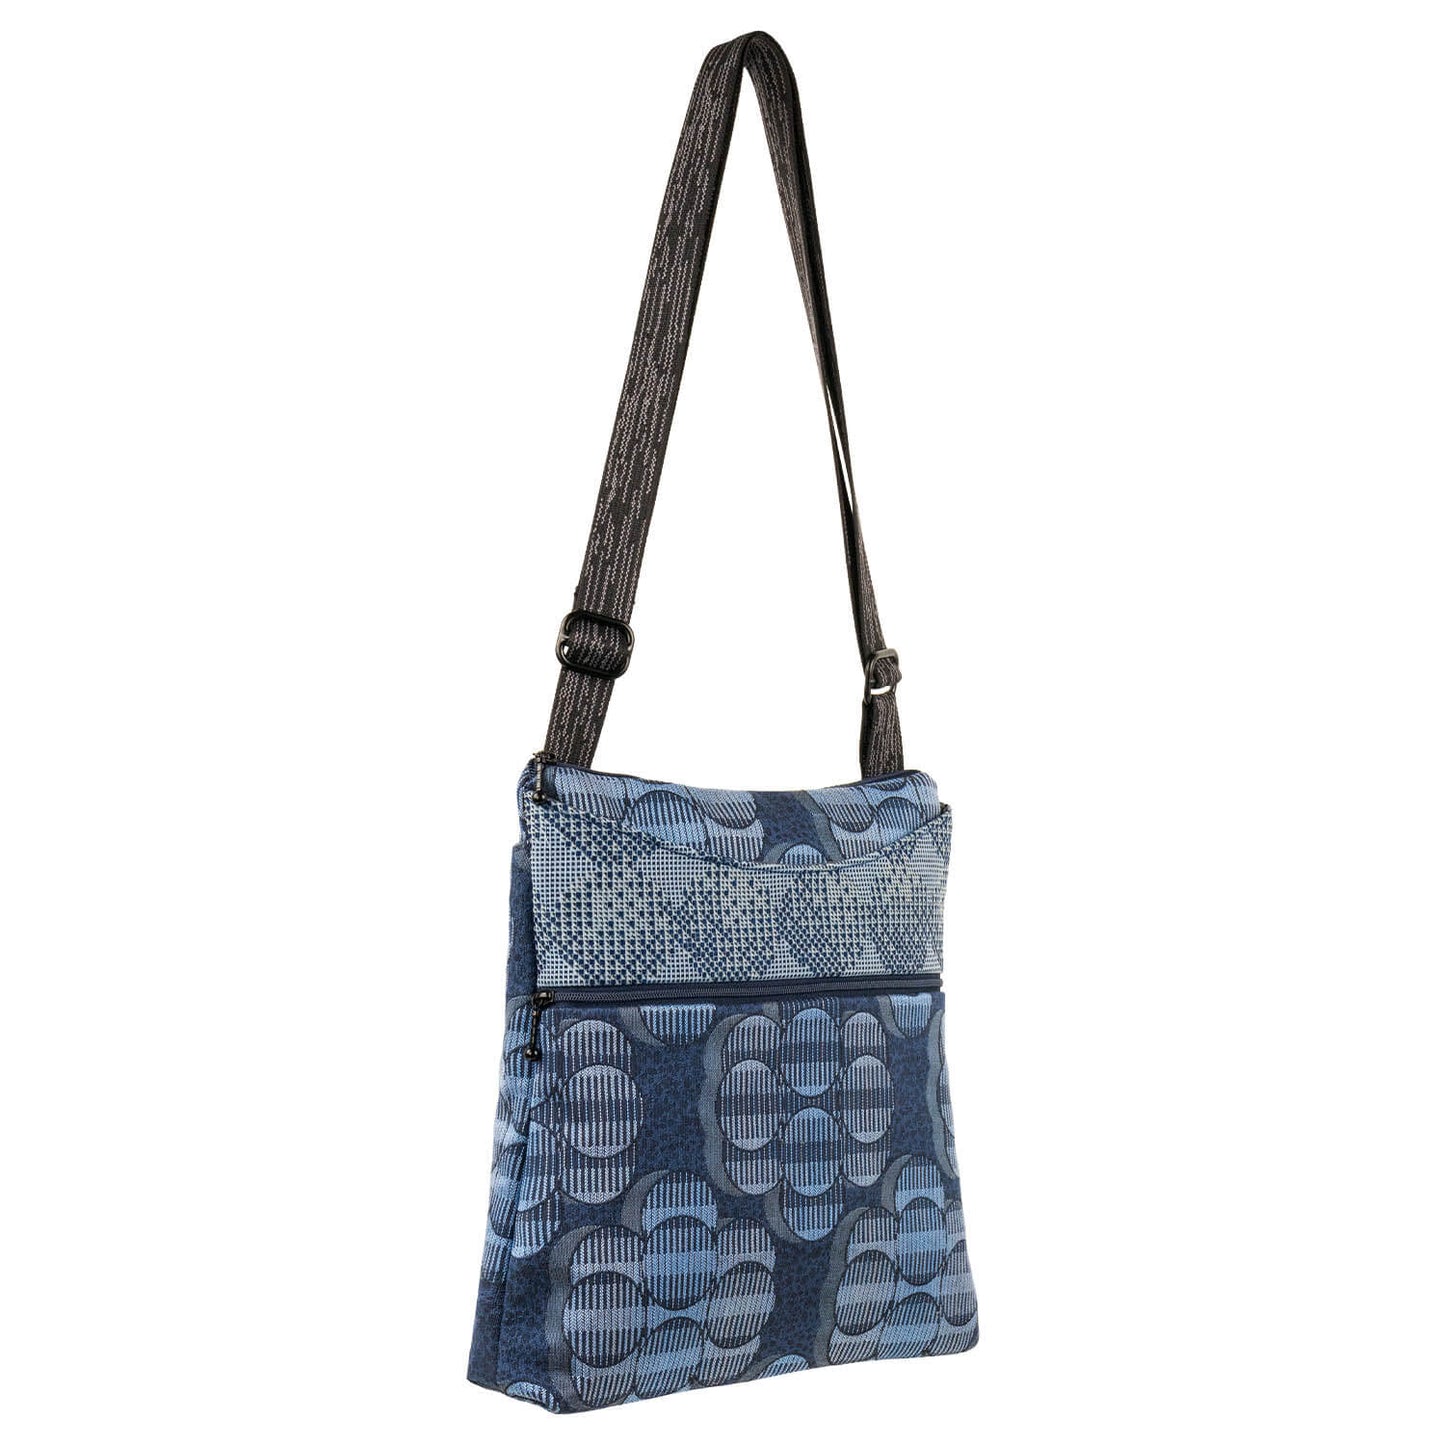 Spree Bag in Lunar Blue by Maruca Designs